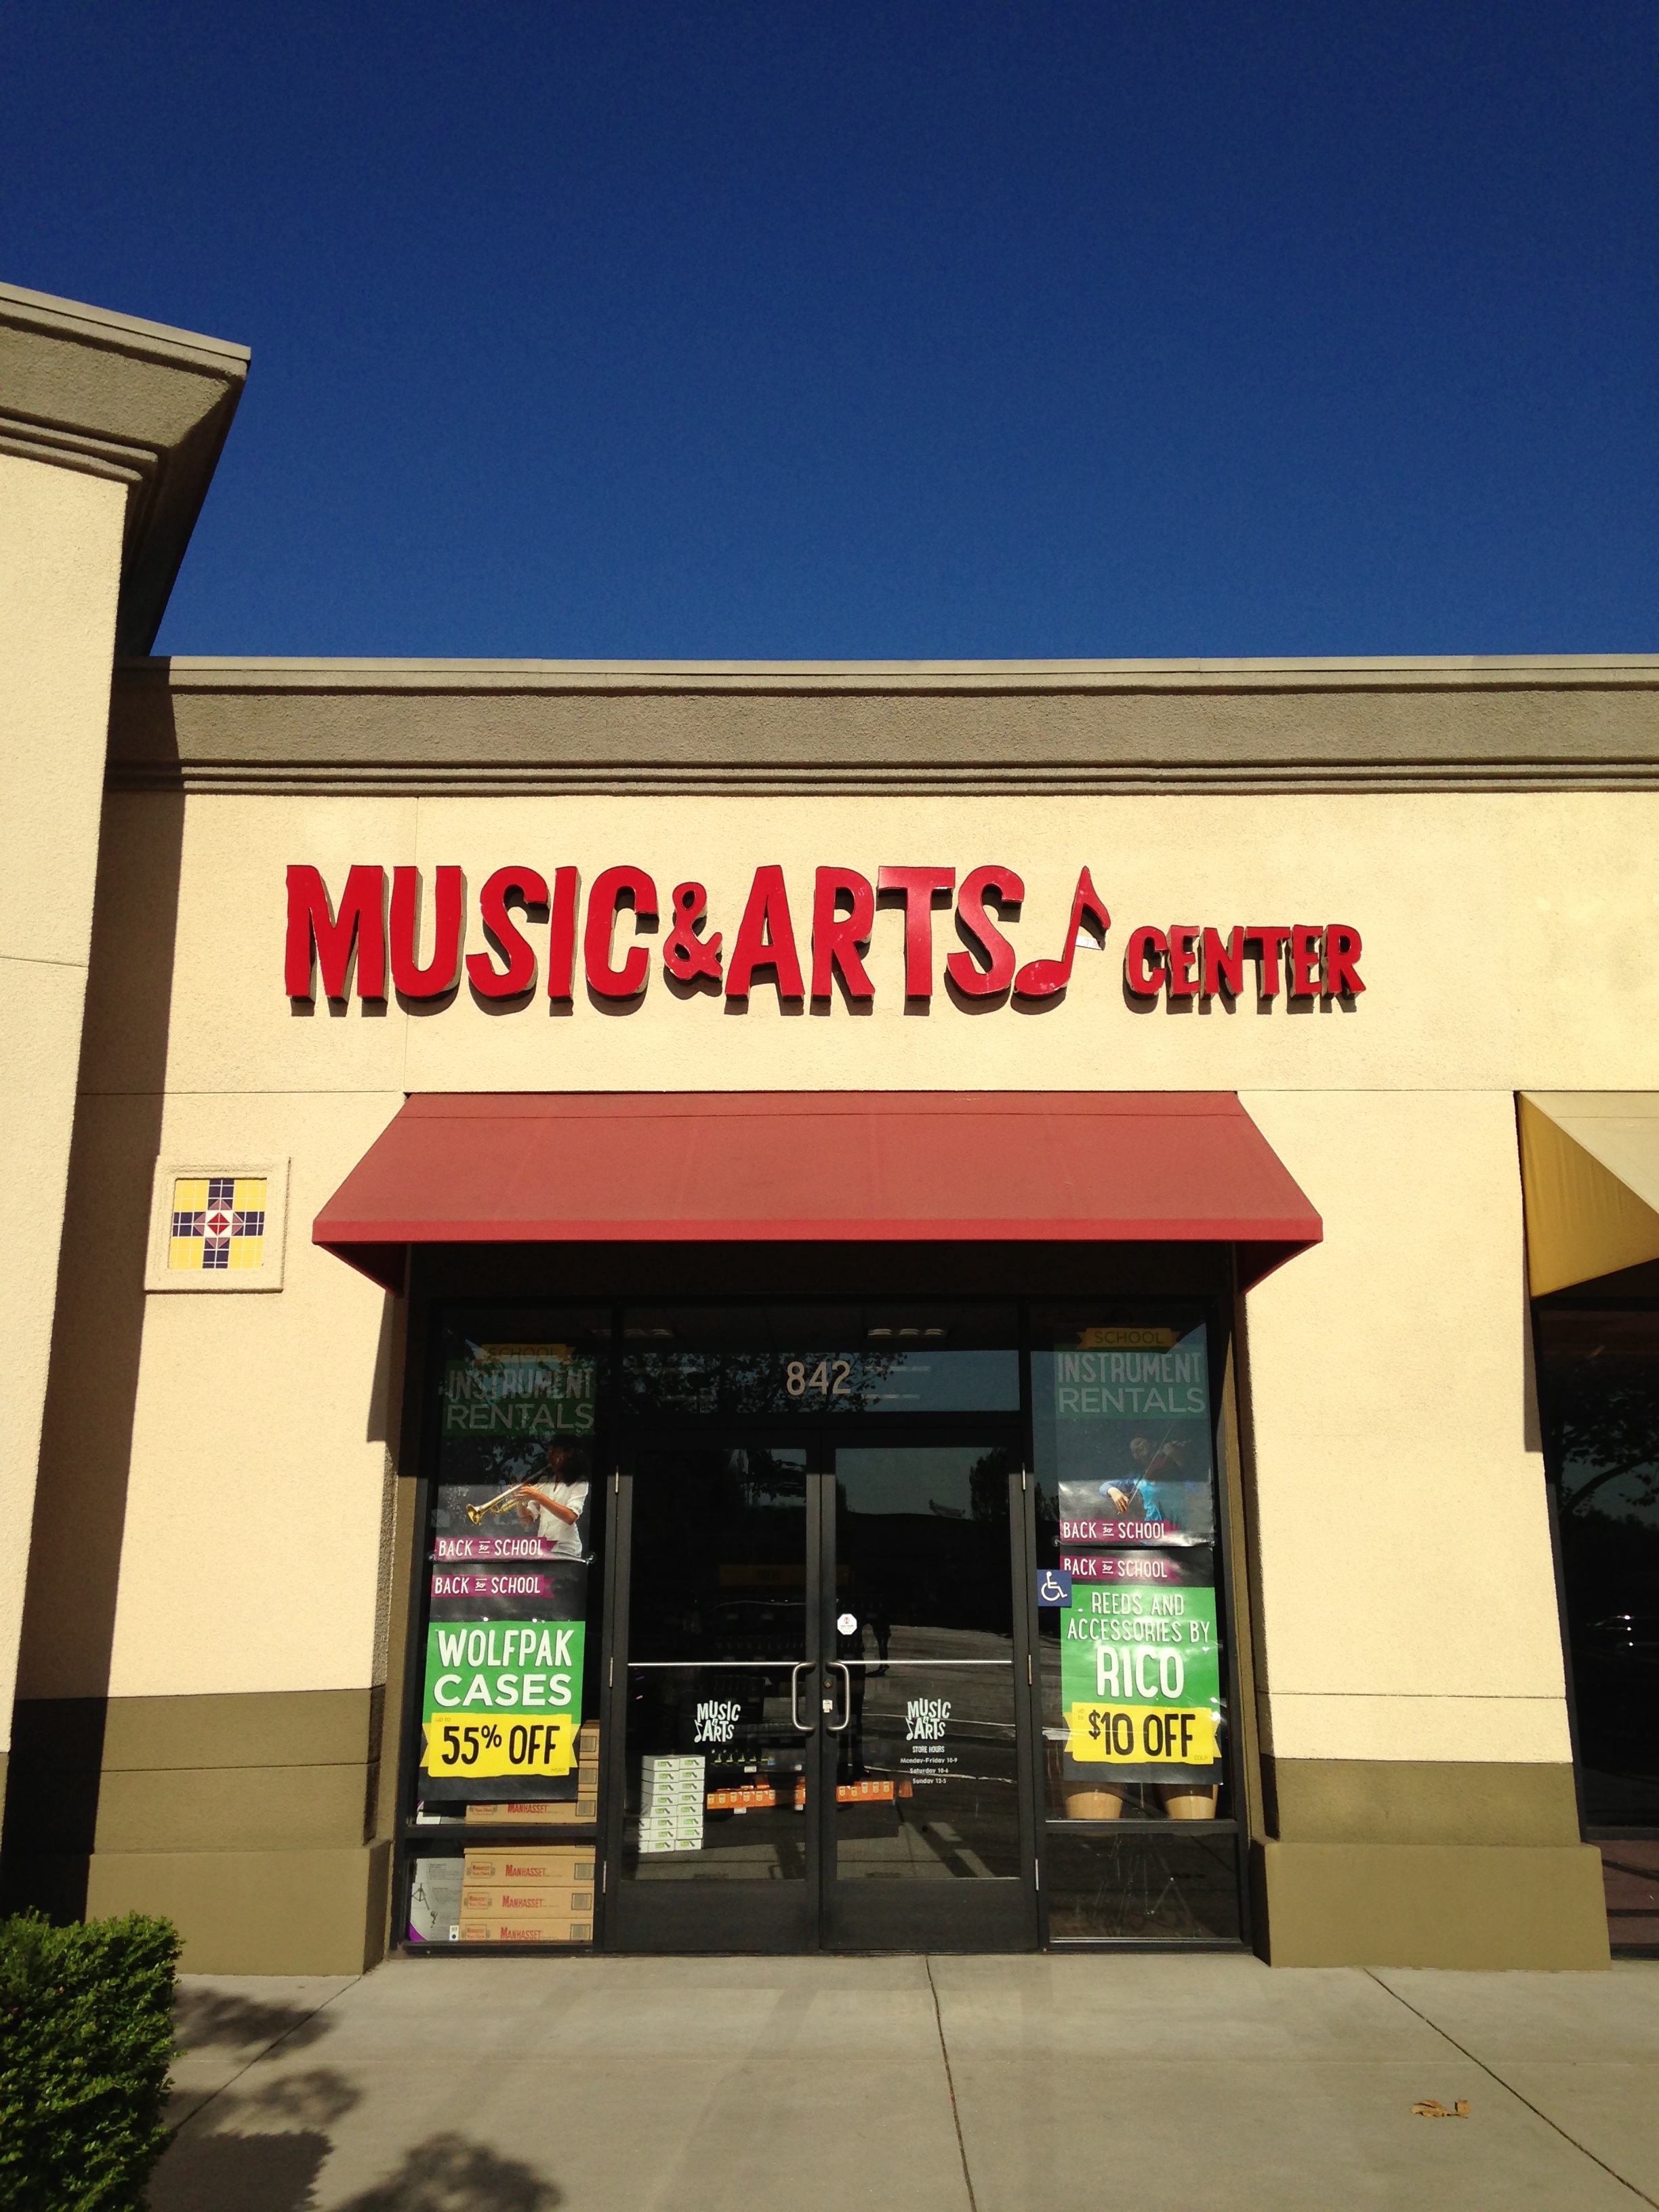 Music & Arts Center Coupons near me in San Dimas, CA 91773 ...